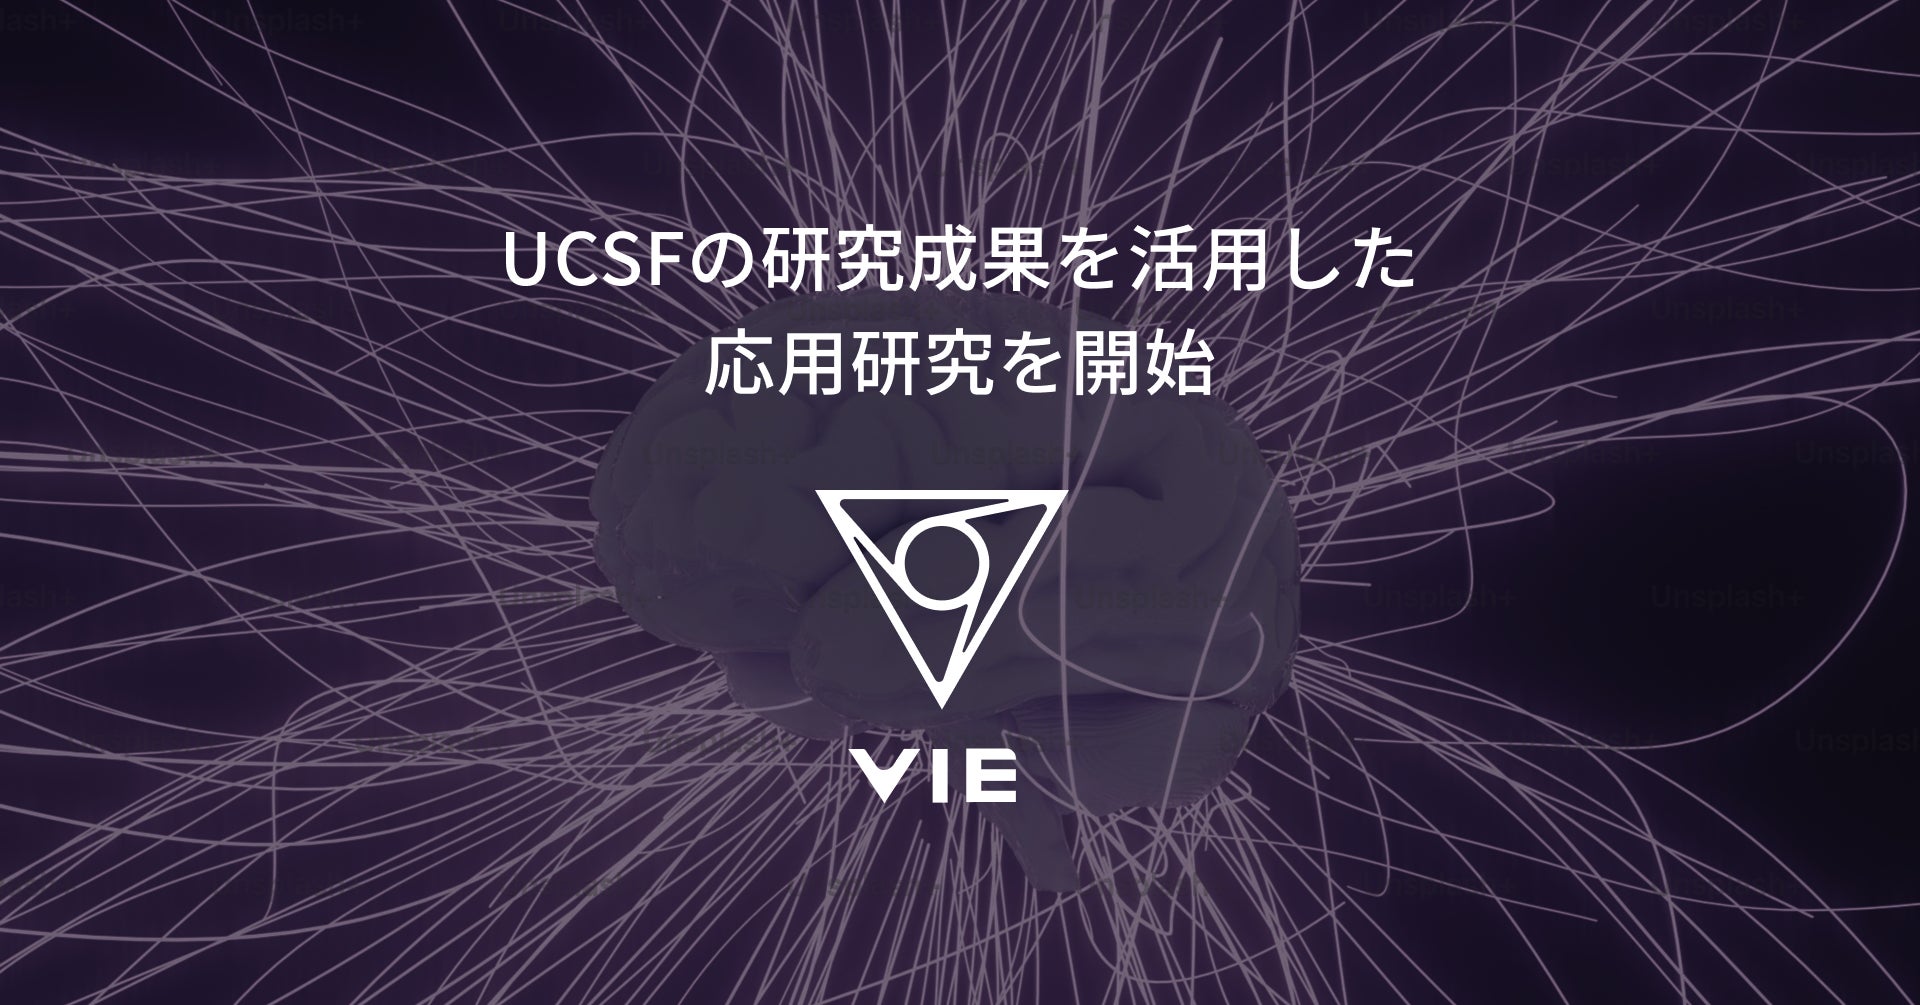 VIE、UCSFの研究成果を活用した応用研究を開始